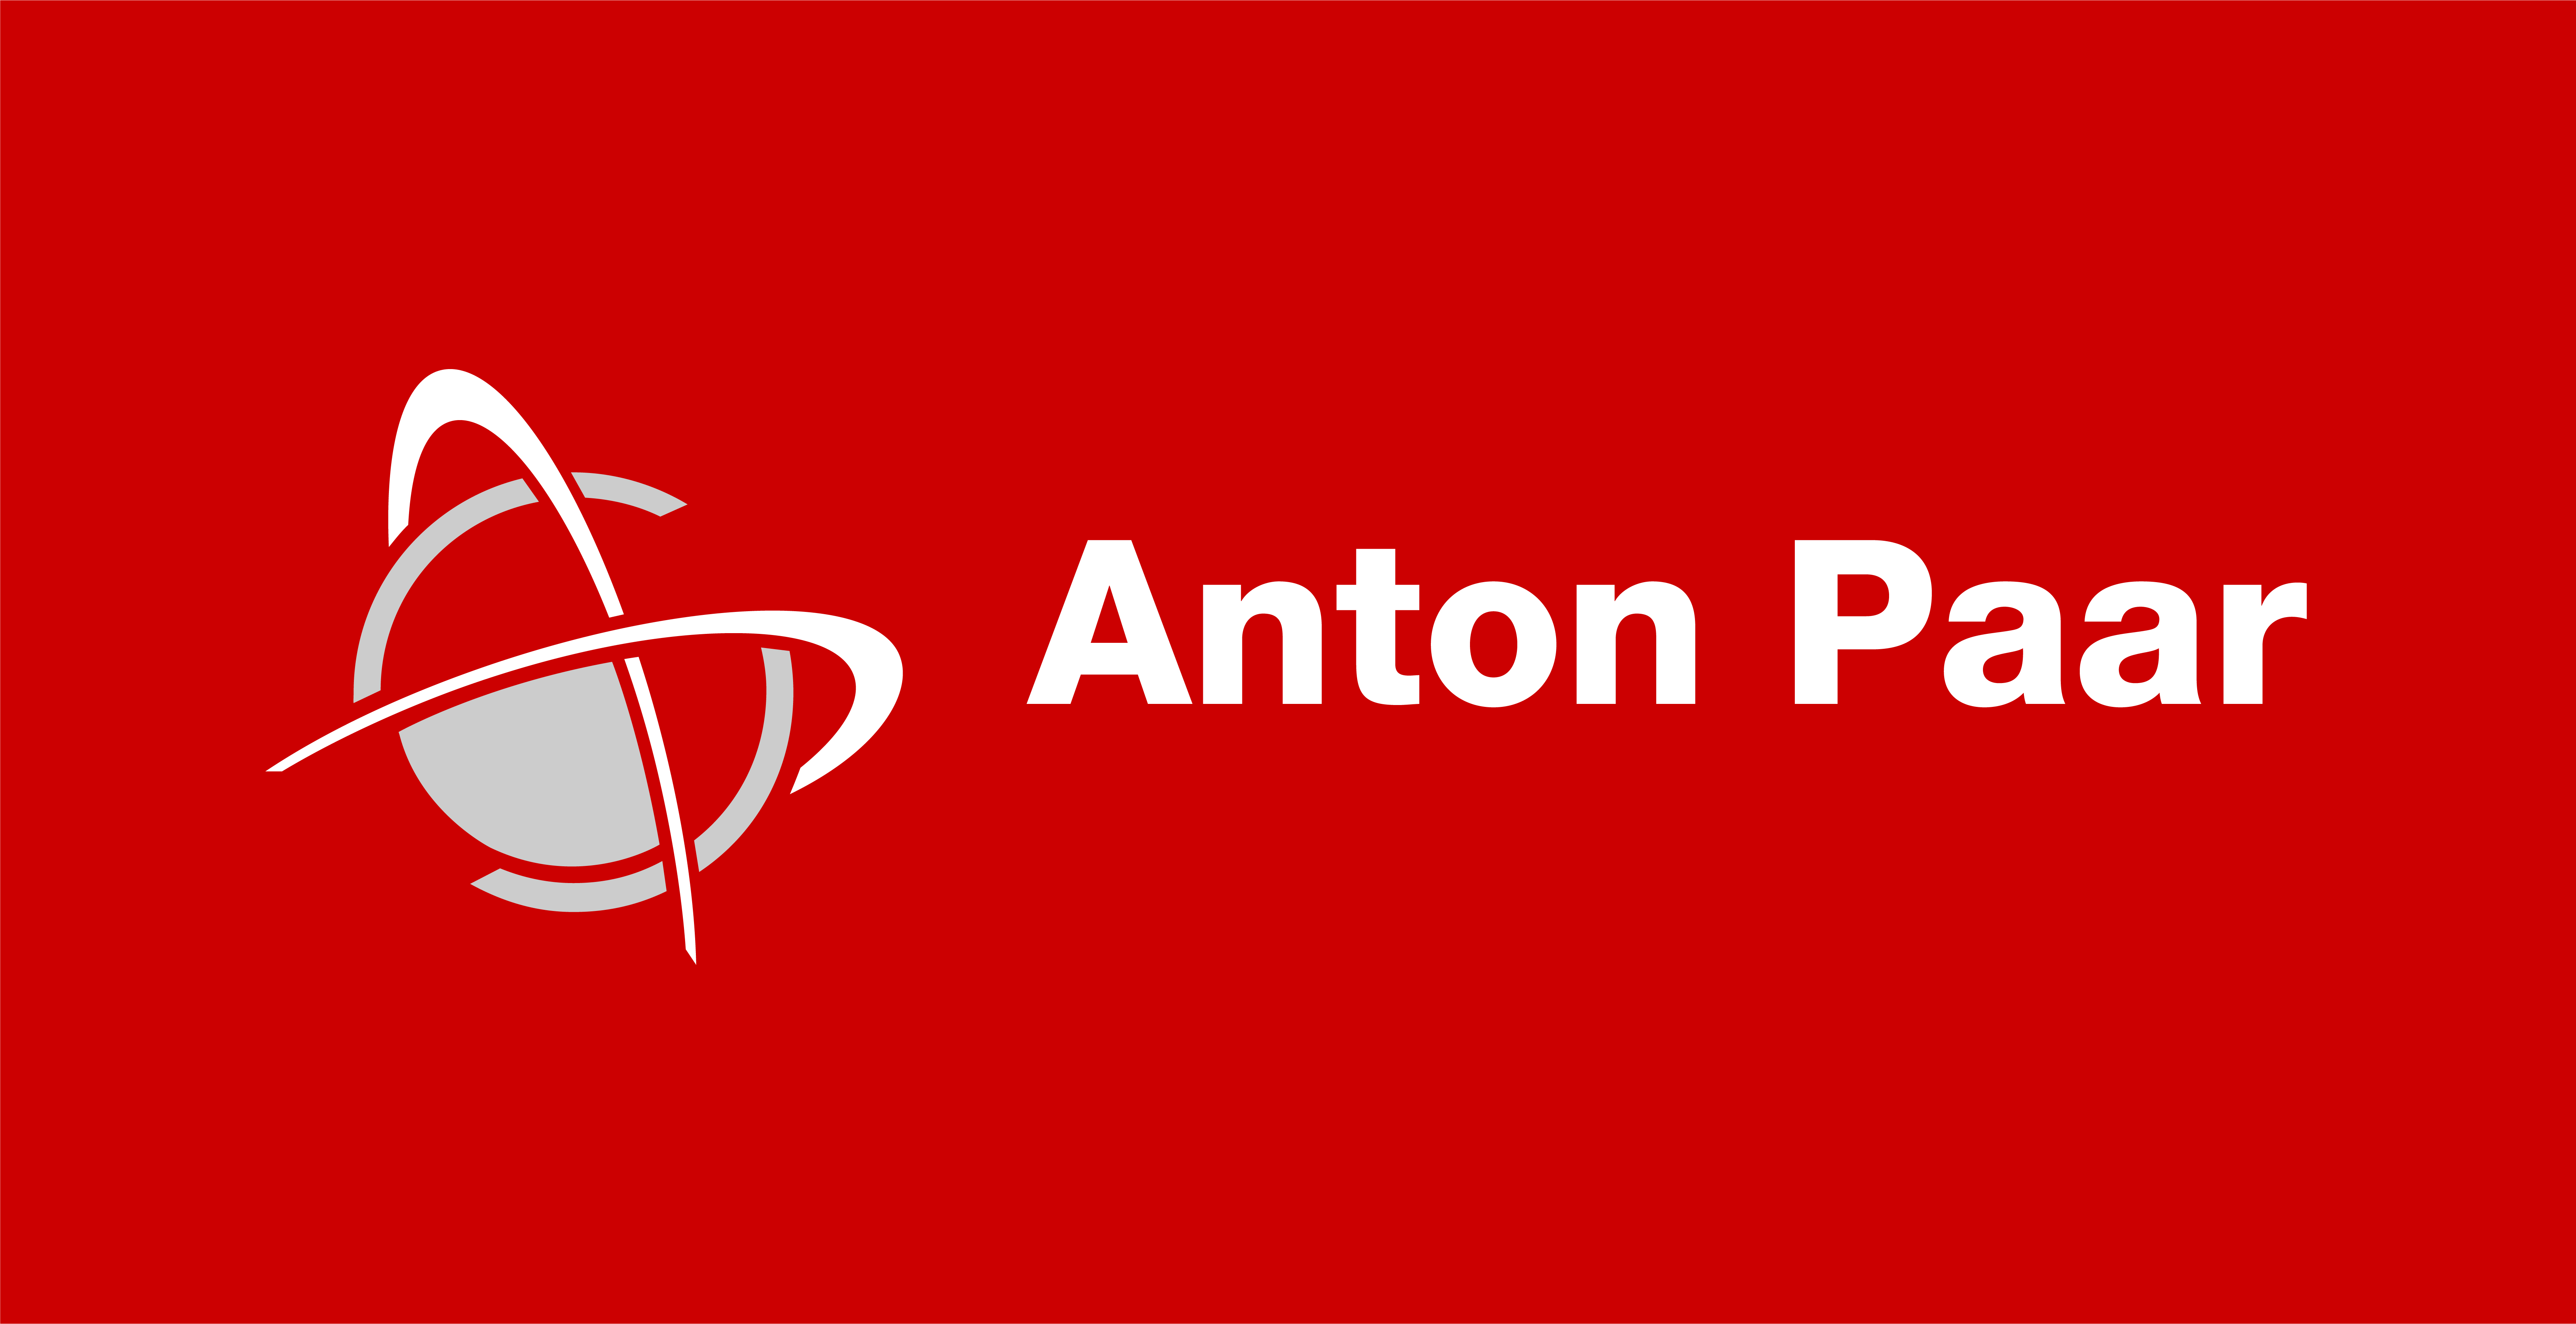 Anton Paar Logo 01